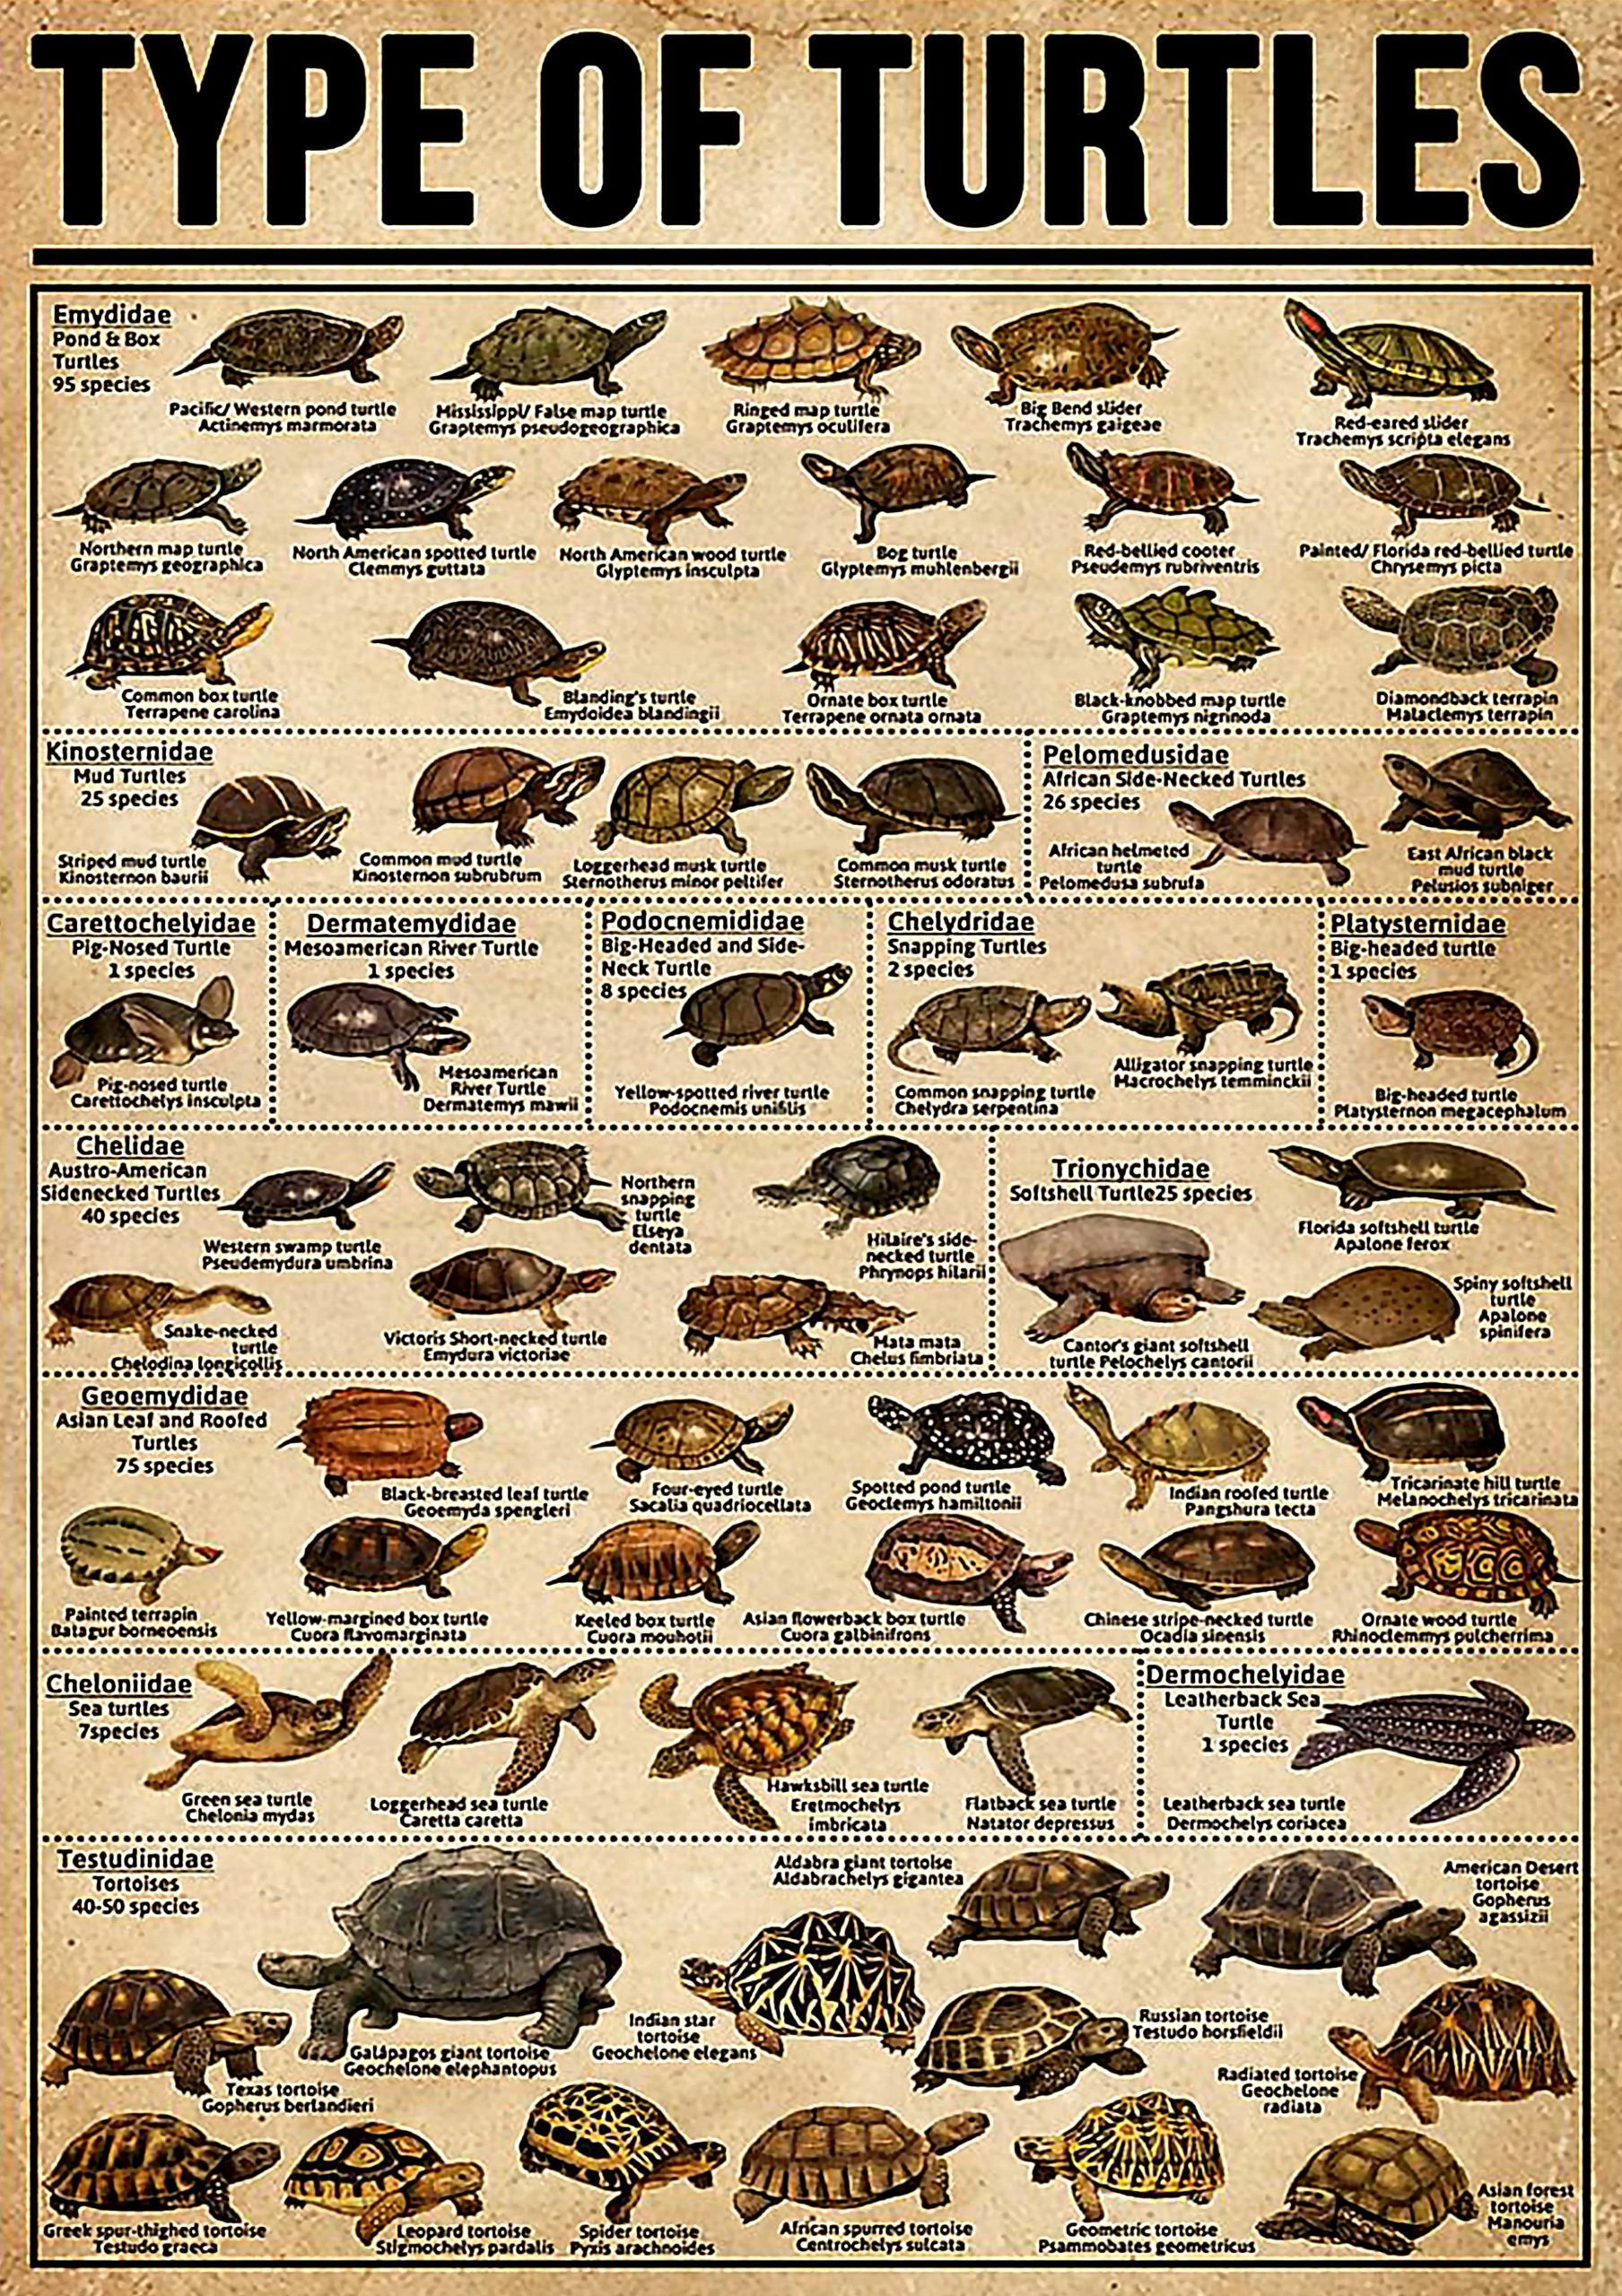 vintage type of turtles poster 1 - Copy (2)